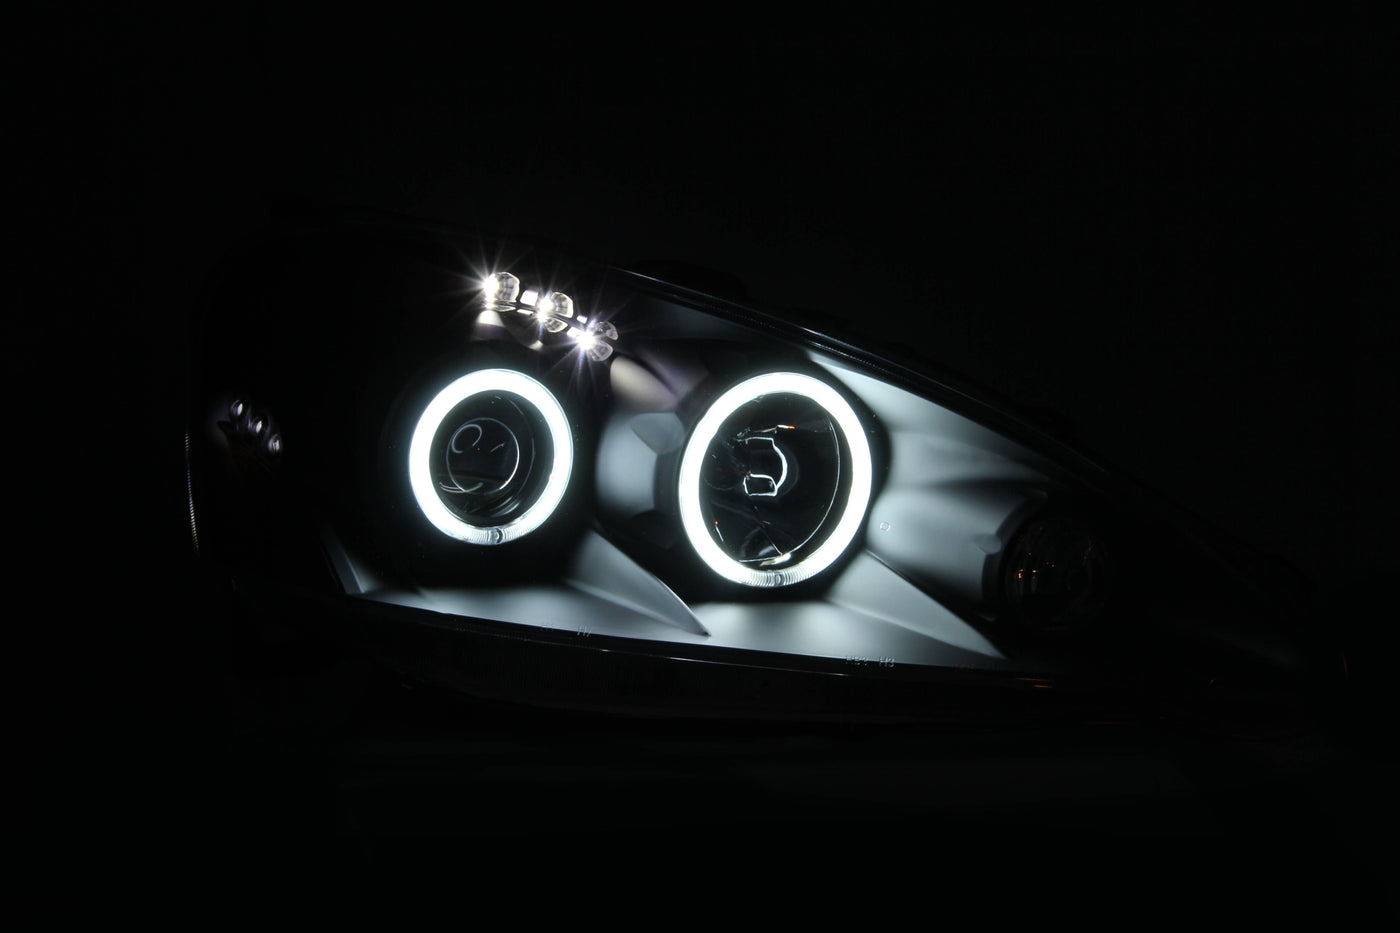 Acura Projector Headlights, Acura Rsx Headlights, Rsx 05-06 Headlights, Black Projector Headlights, Anzo Projector Headlights